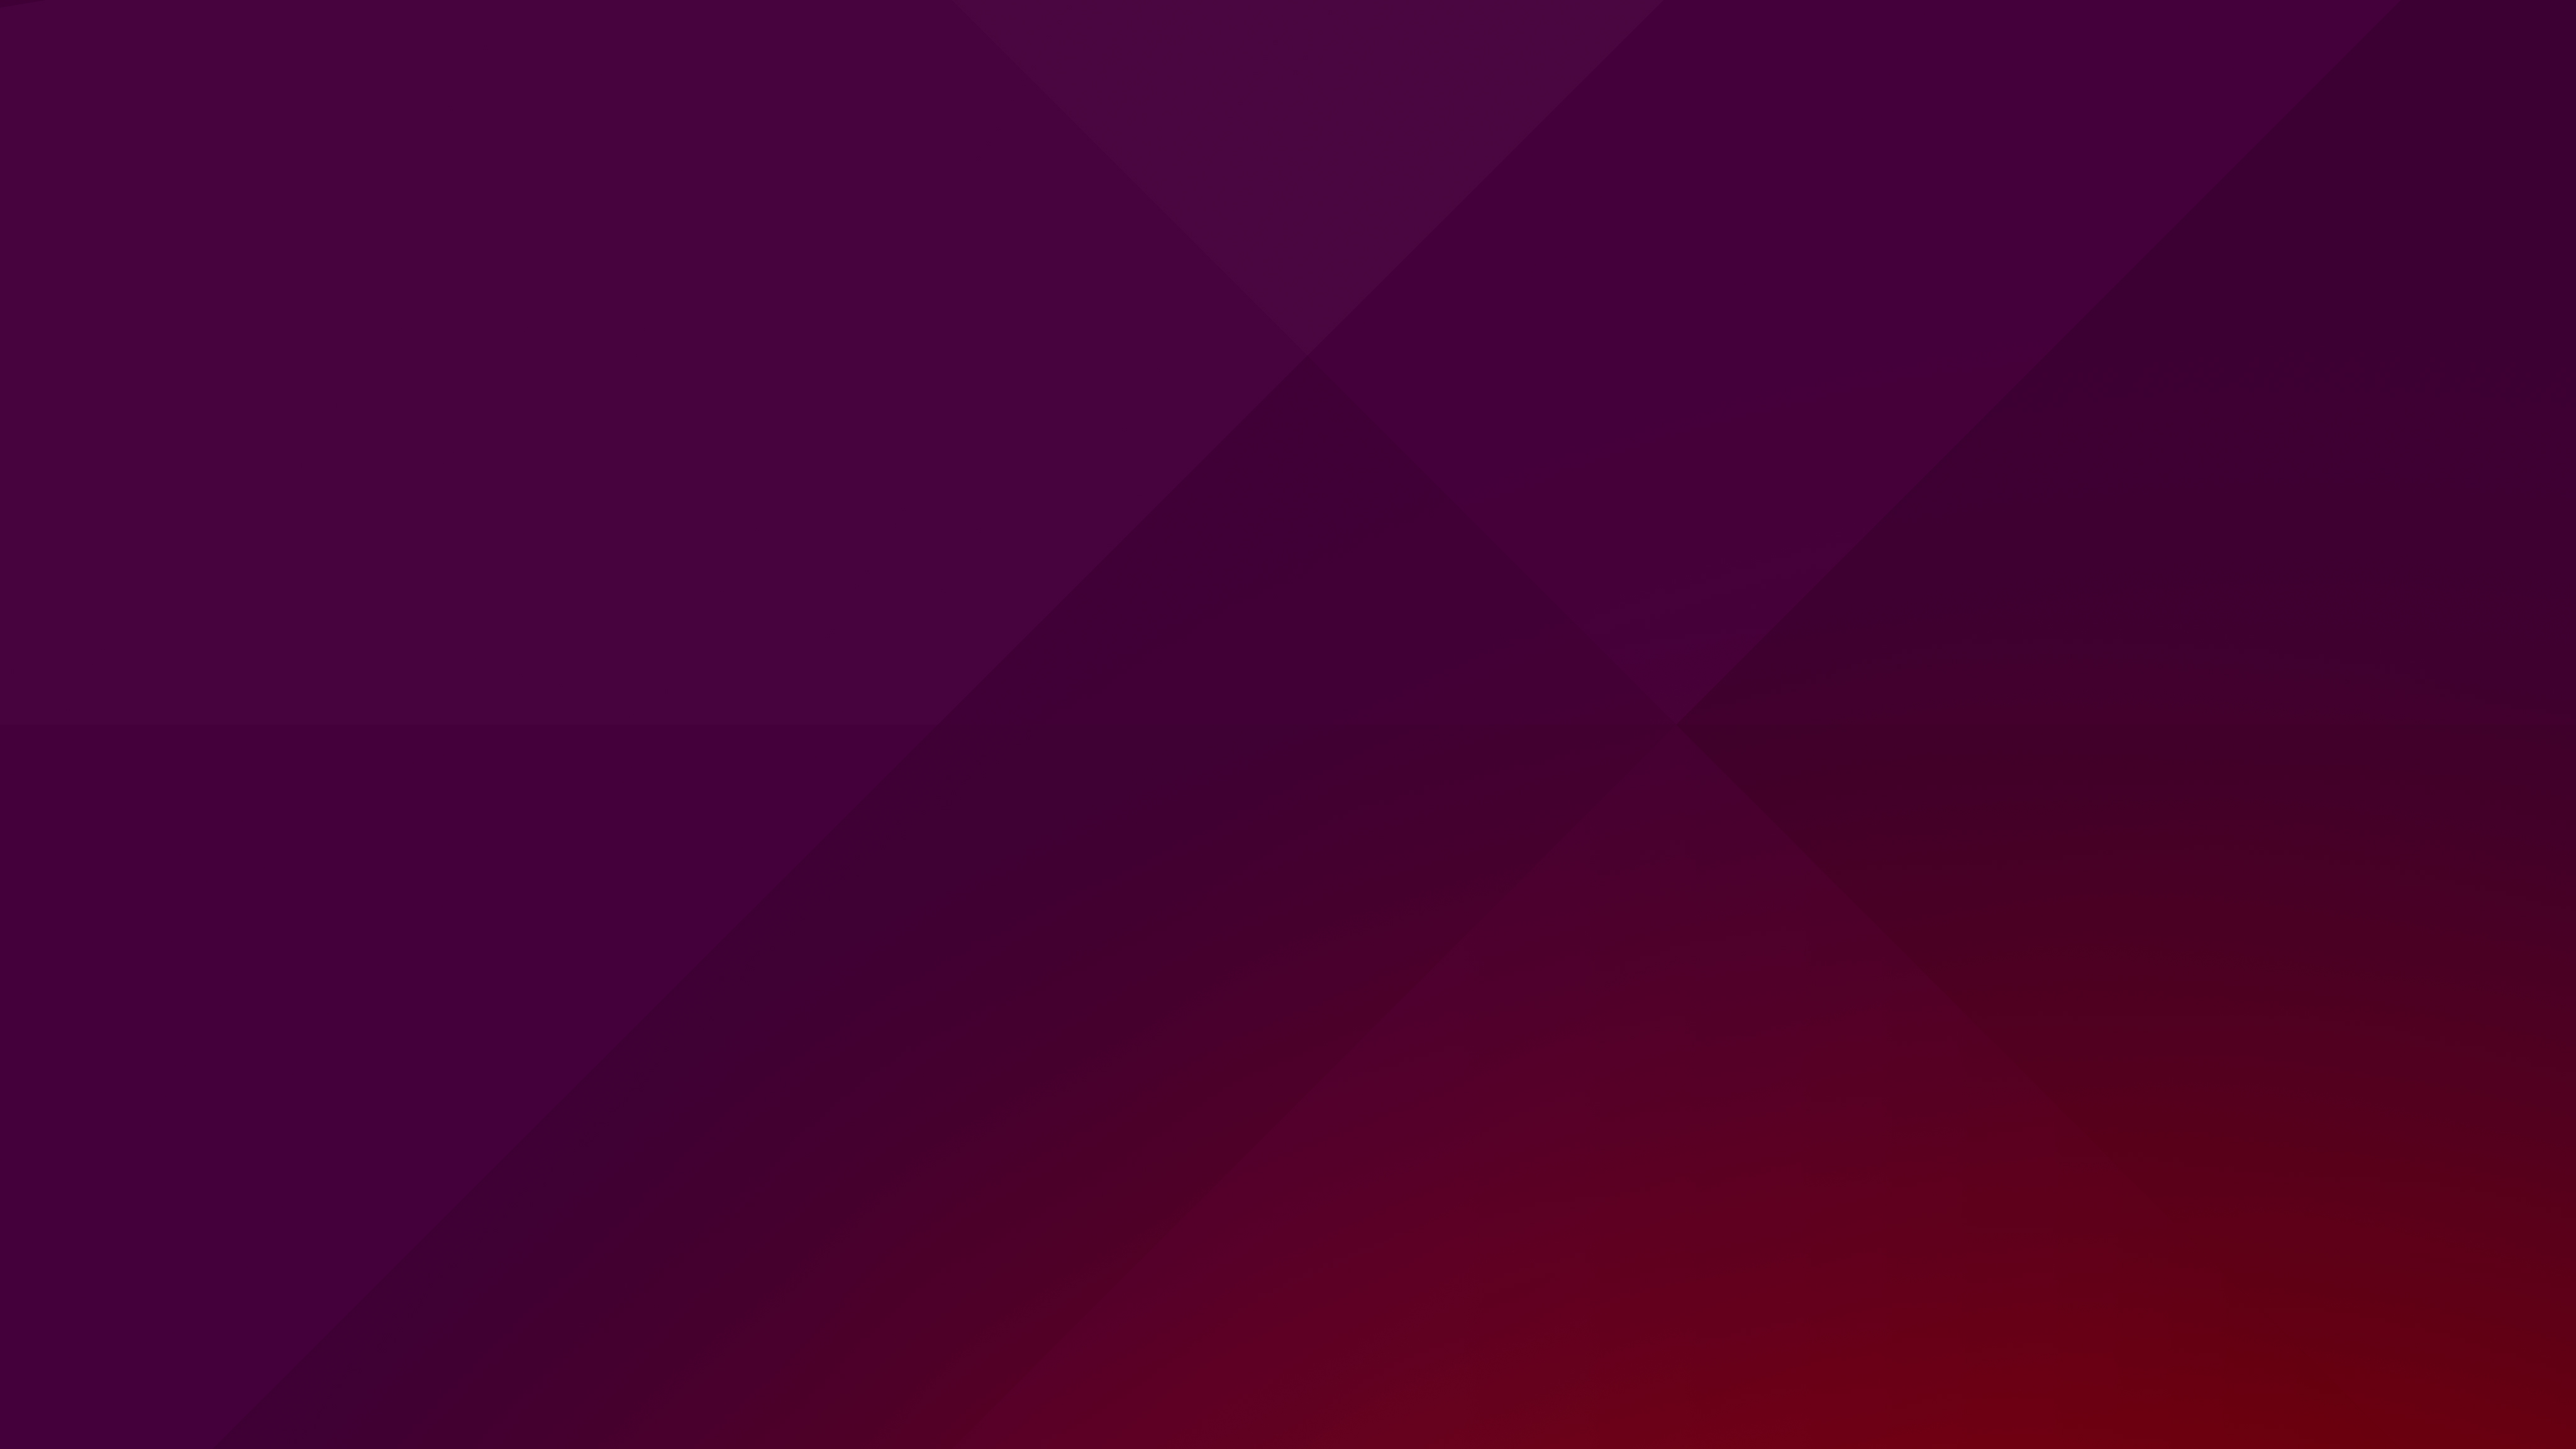 New Ubuntu Default Wallpaper Revealed